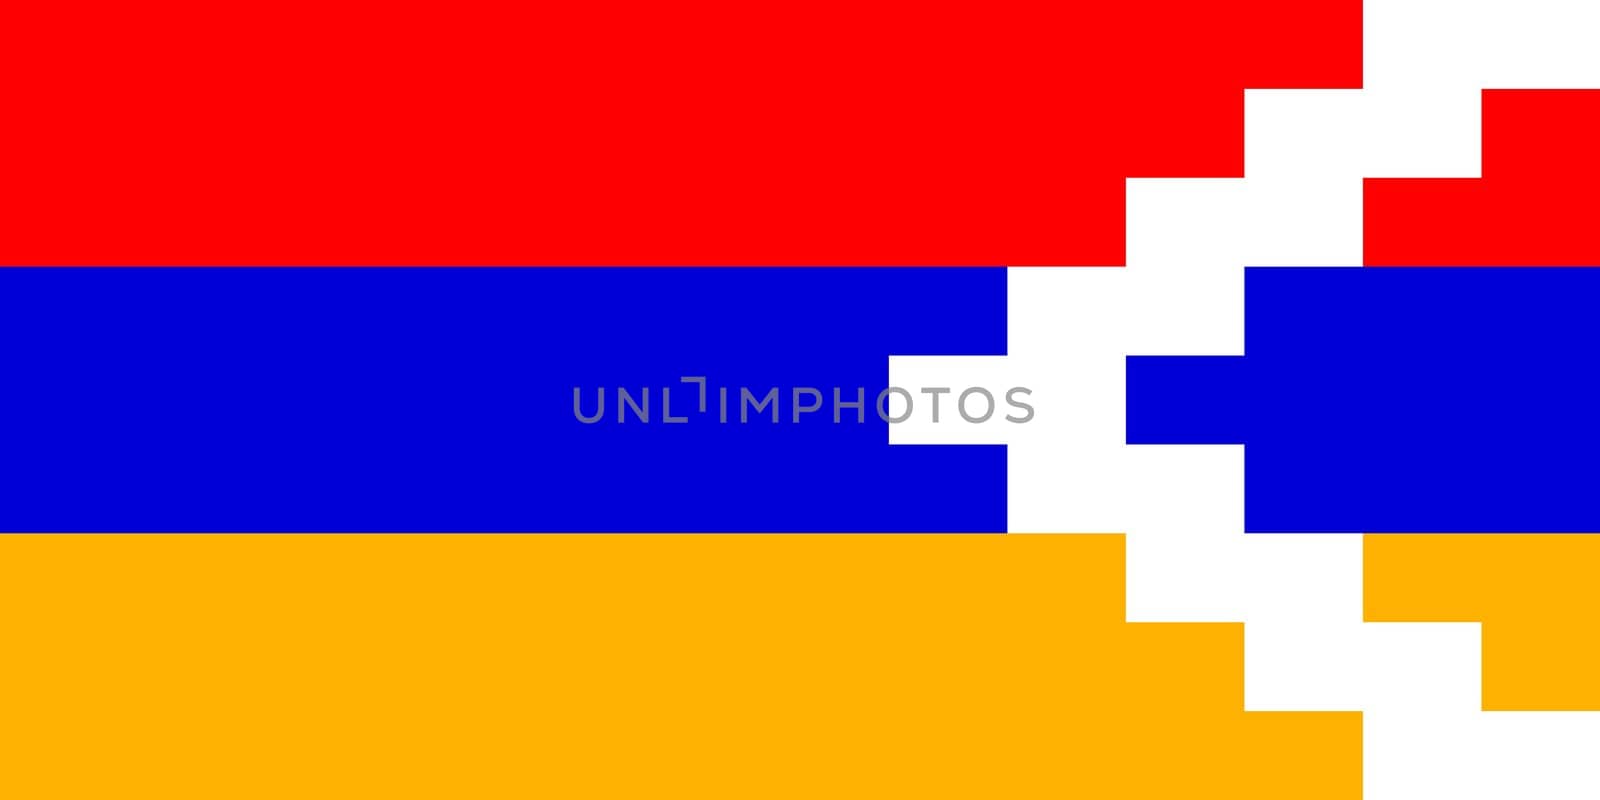 The national flag of Nagorno Karabakh